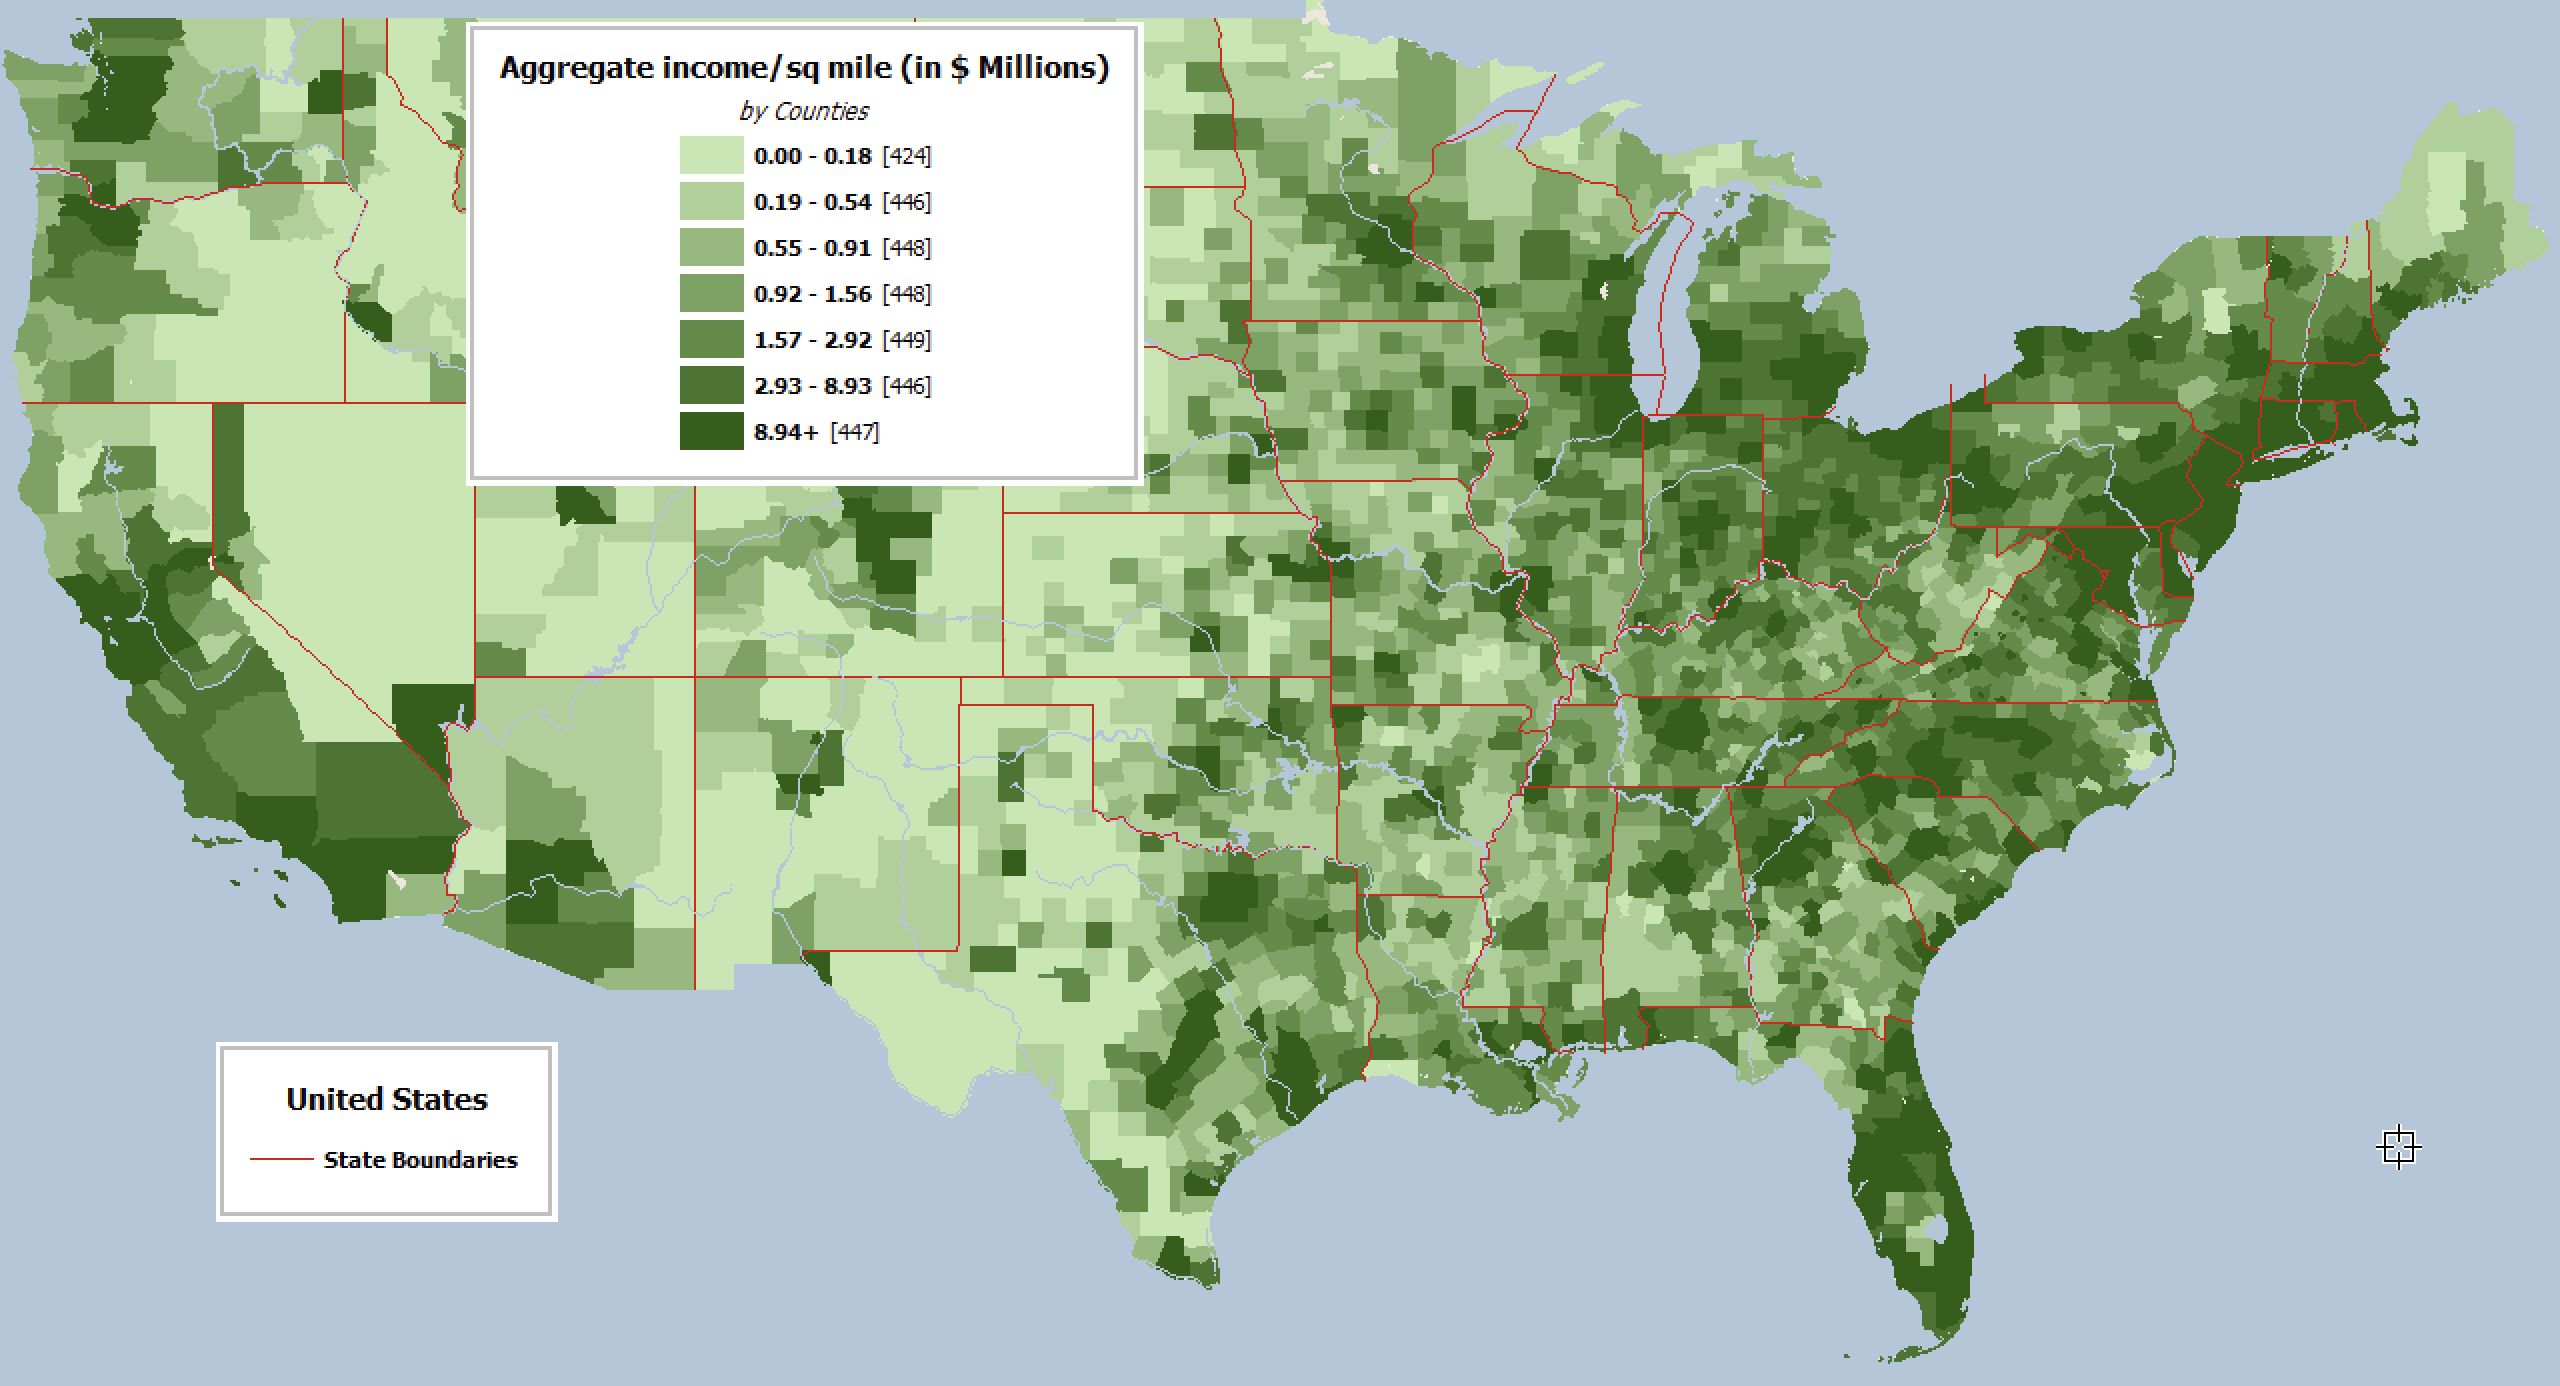 Households per square mile